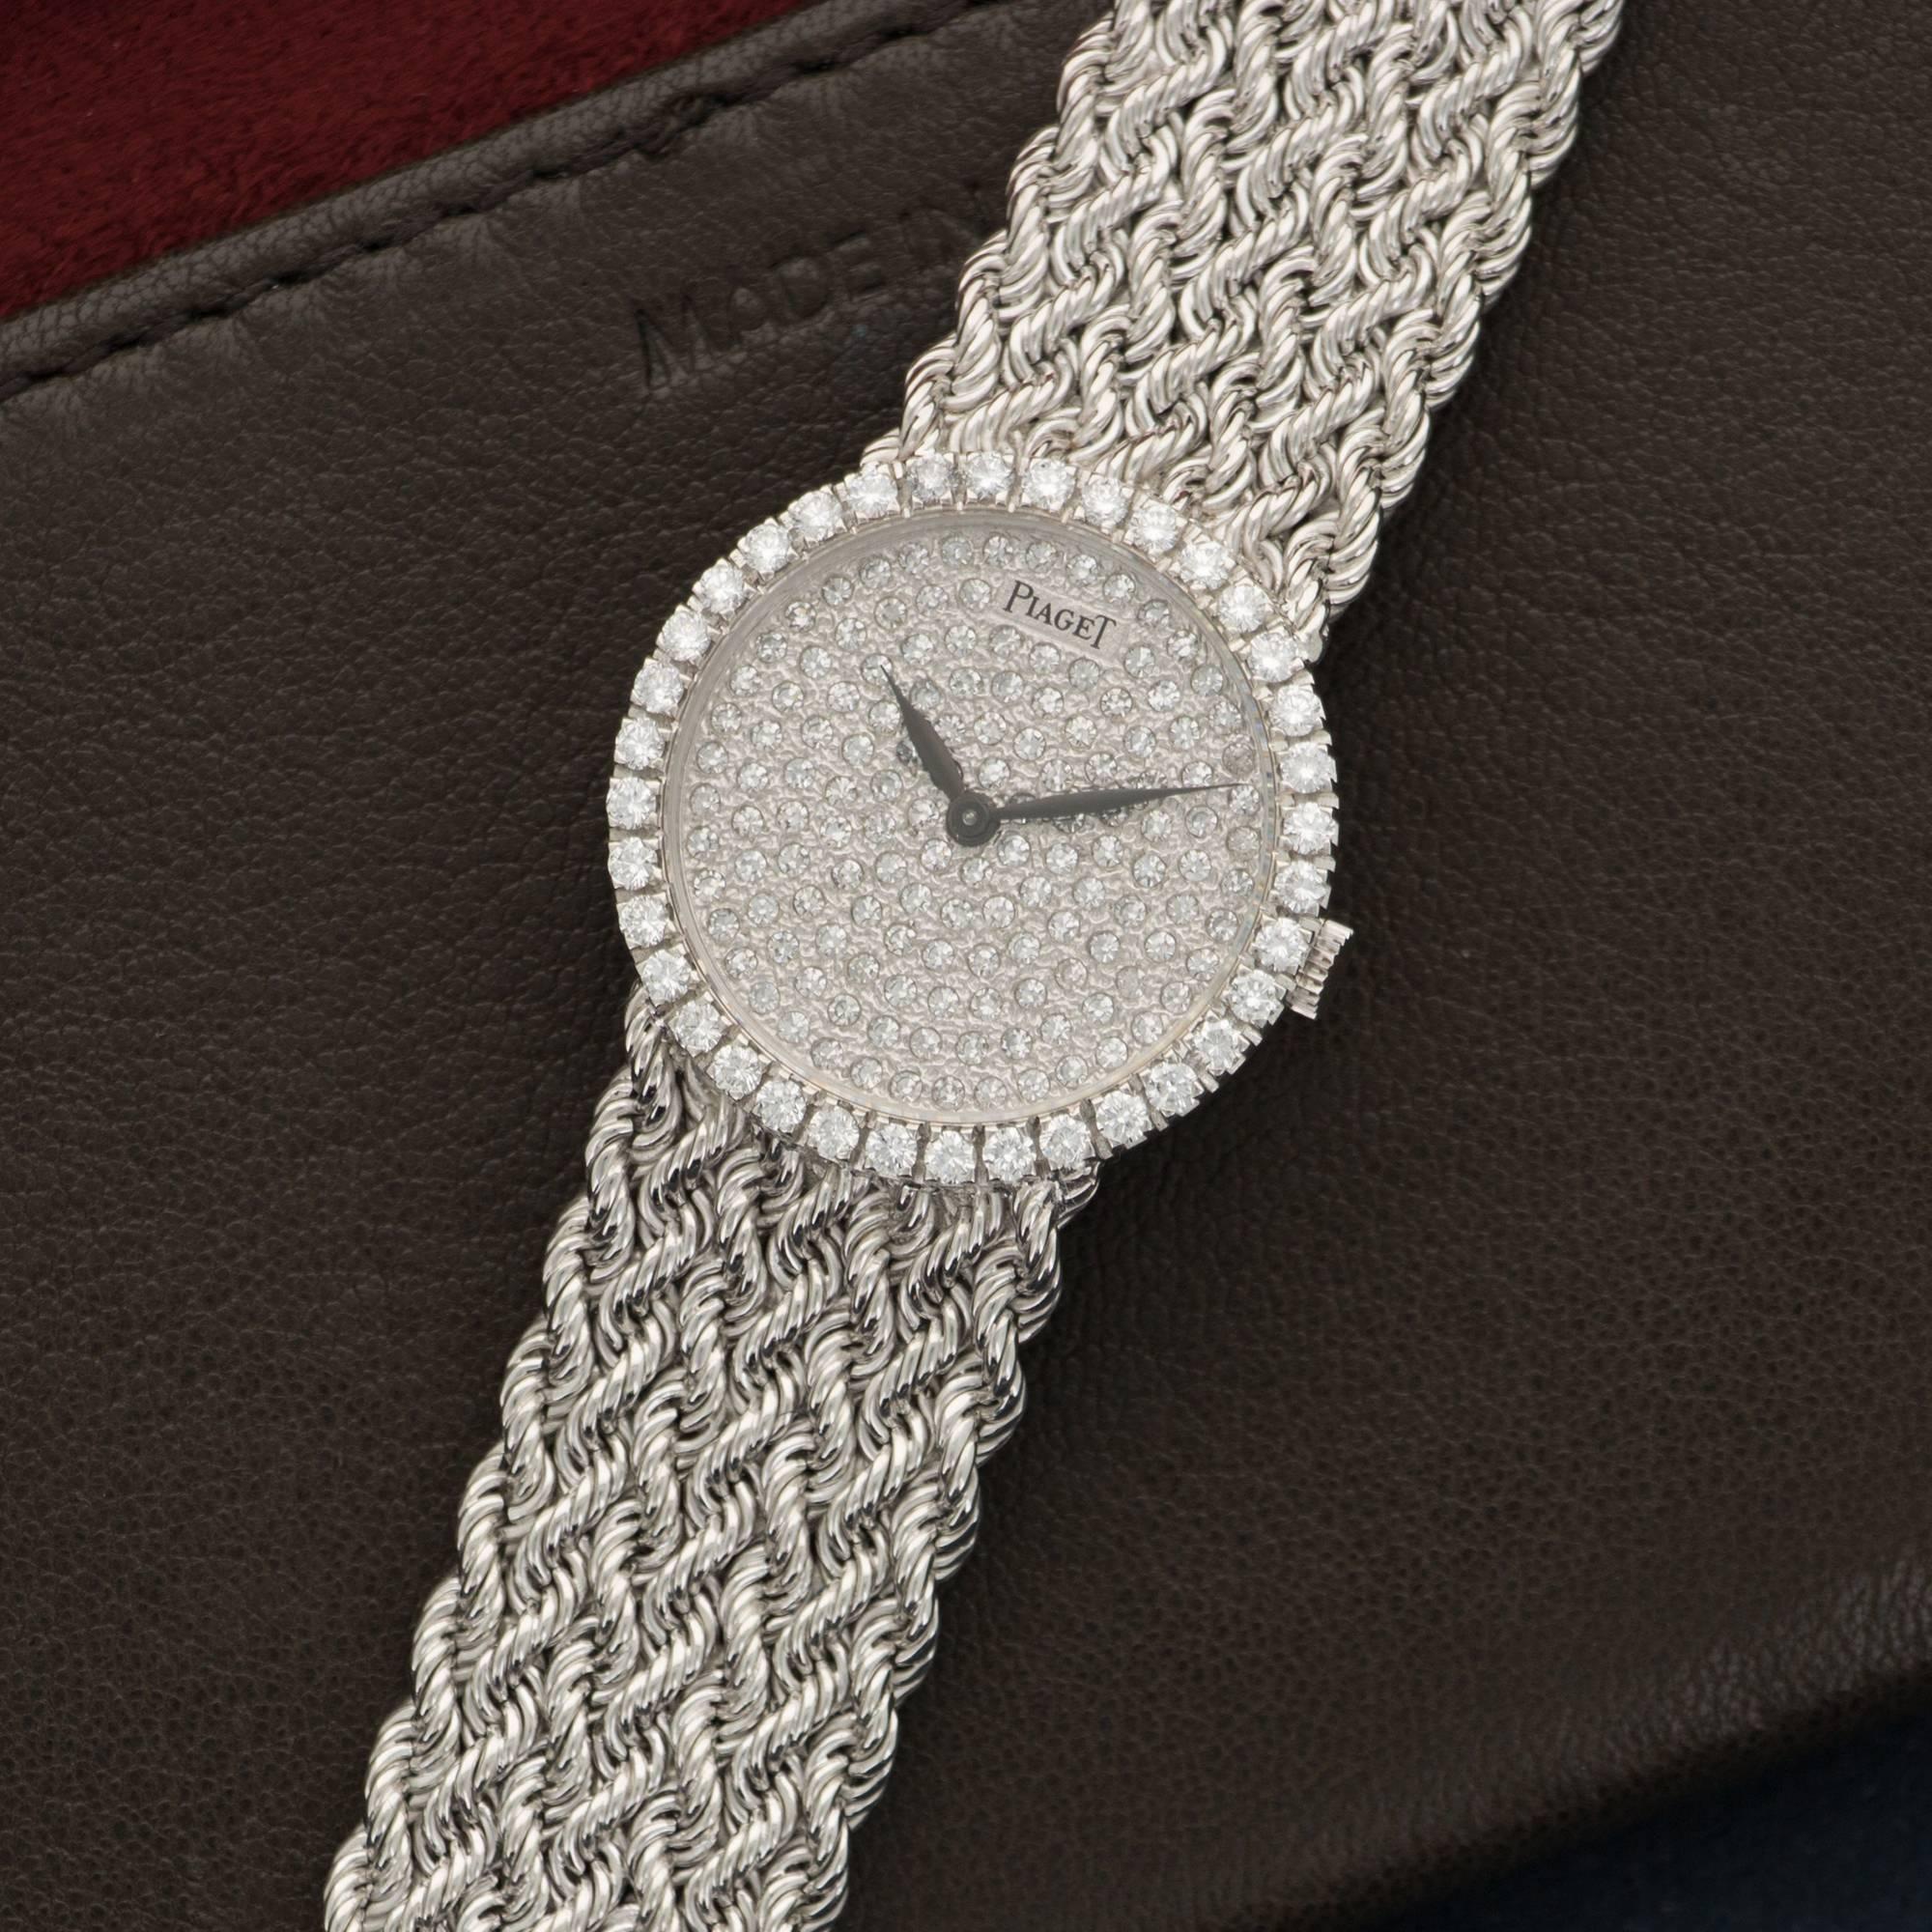 An 18k White Gold Wove-Link Bracelet Watch by Piaget. Full Original Pave Diamond Bezel and Dial. Mechanical Wind. 26mm Diameter Case. Circa 1970's